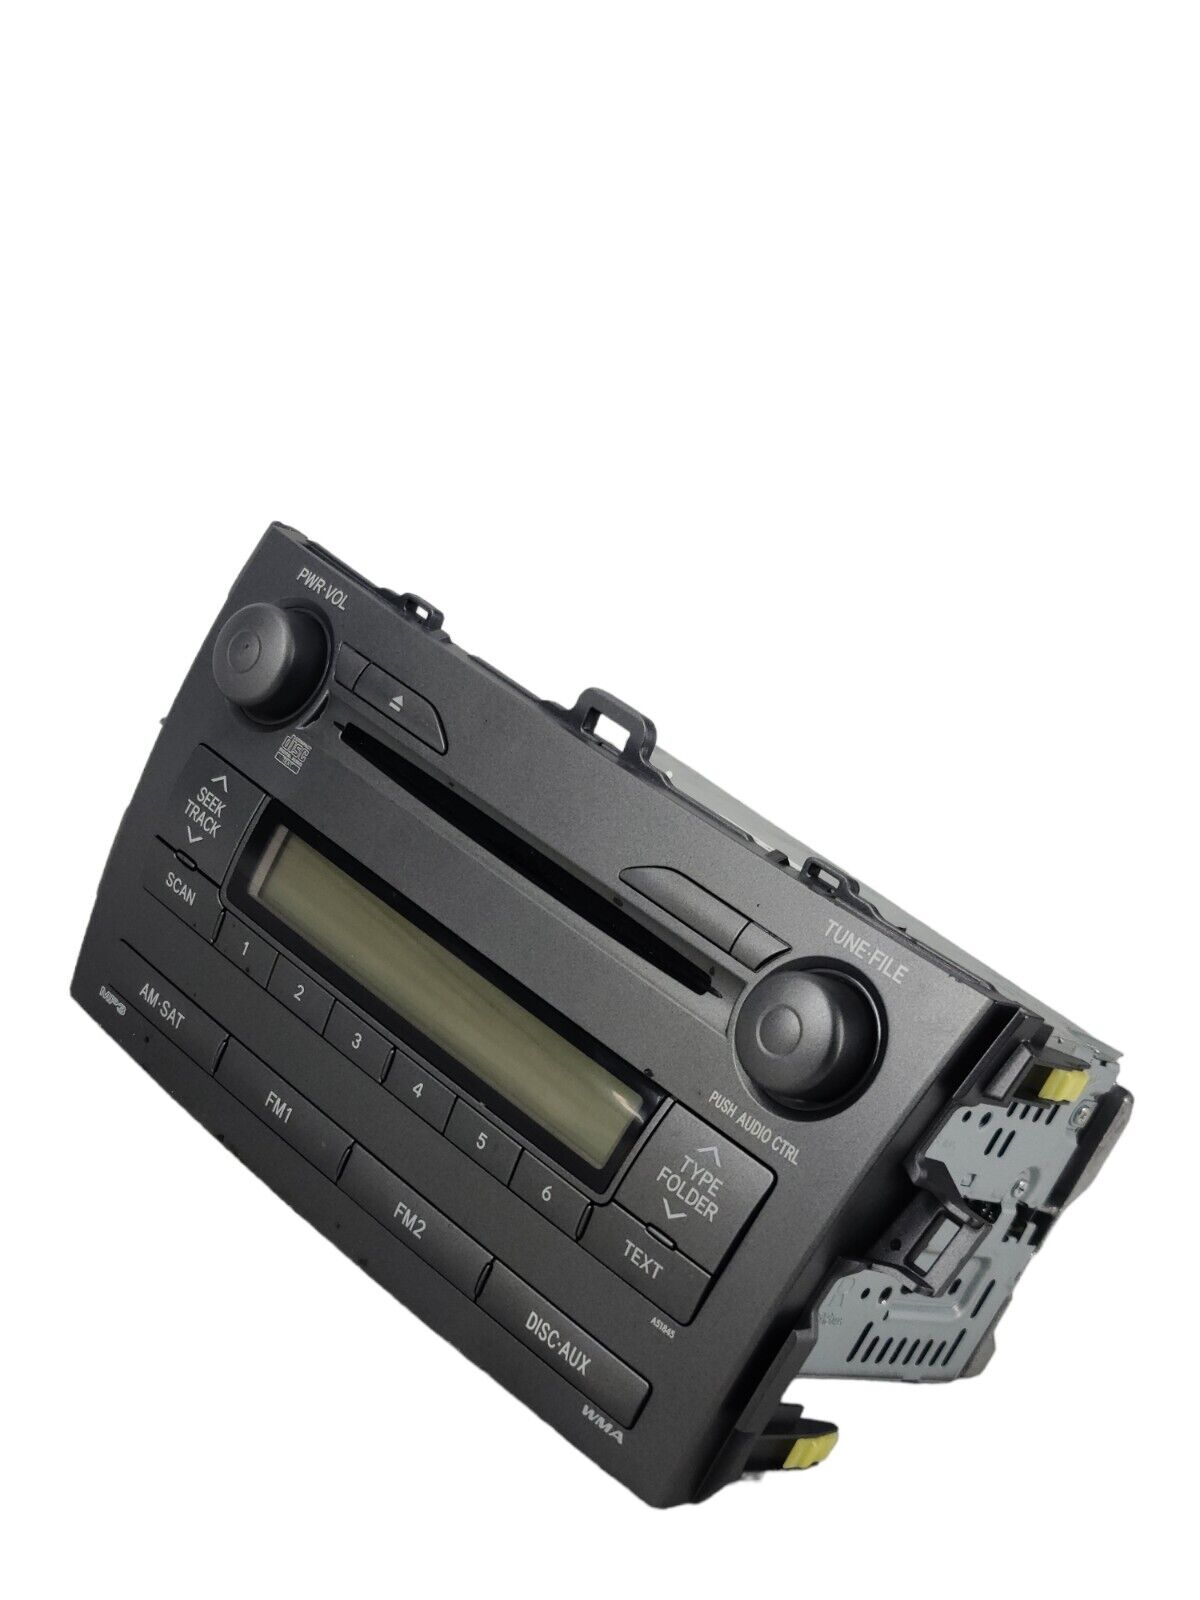 2006 Toyota Corolla JBL Radio 6 Disc Changer CD Player OEM FIX